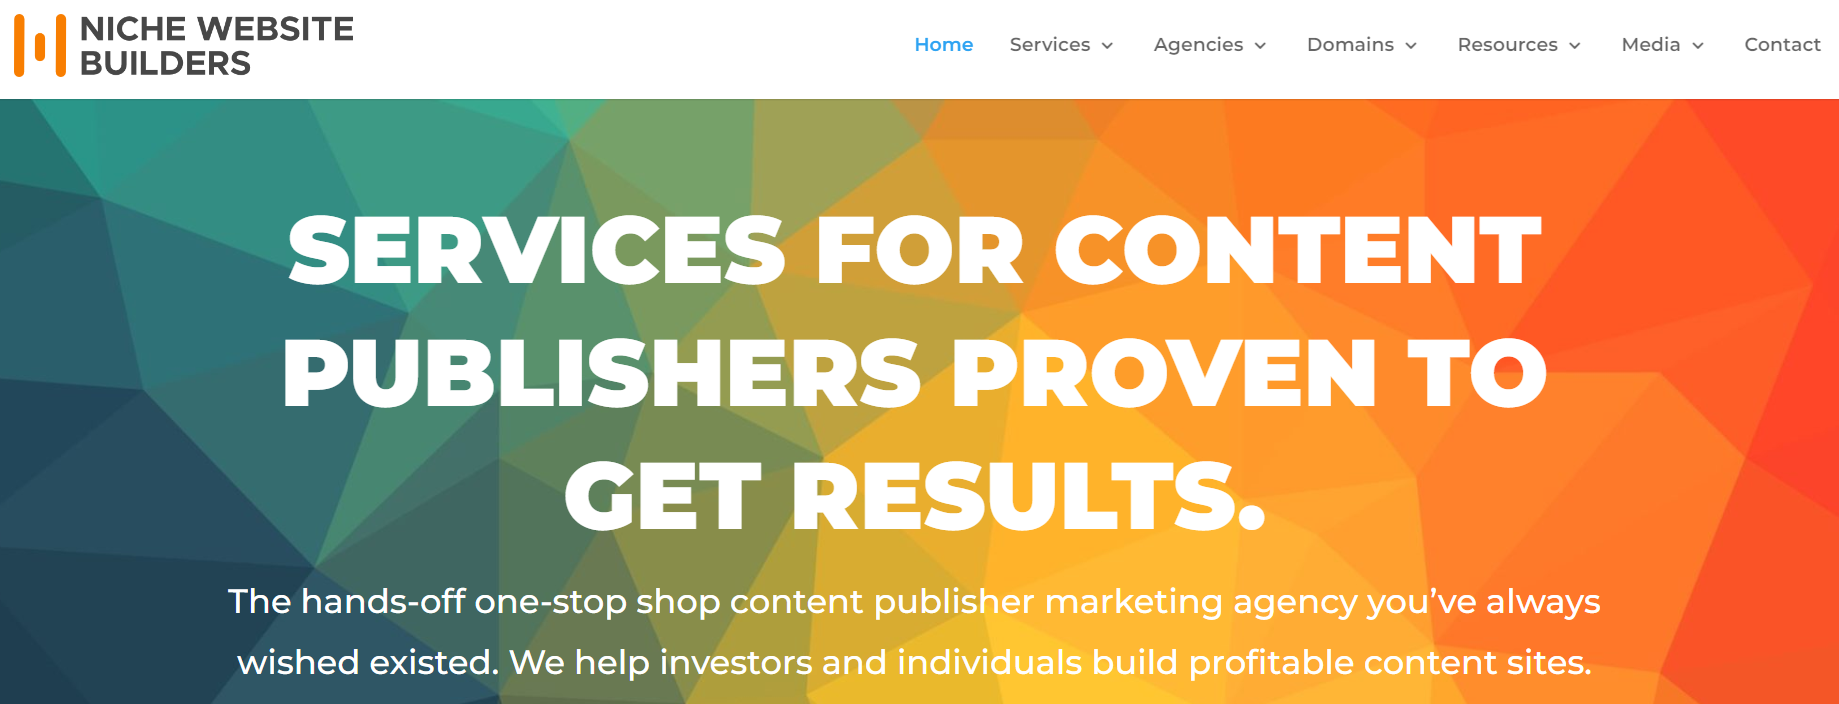 niche website builders blog management services homepage screenshot